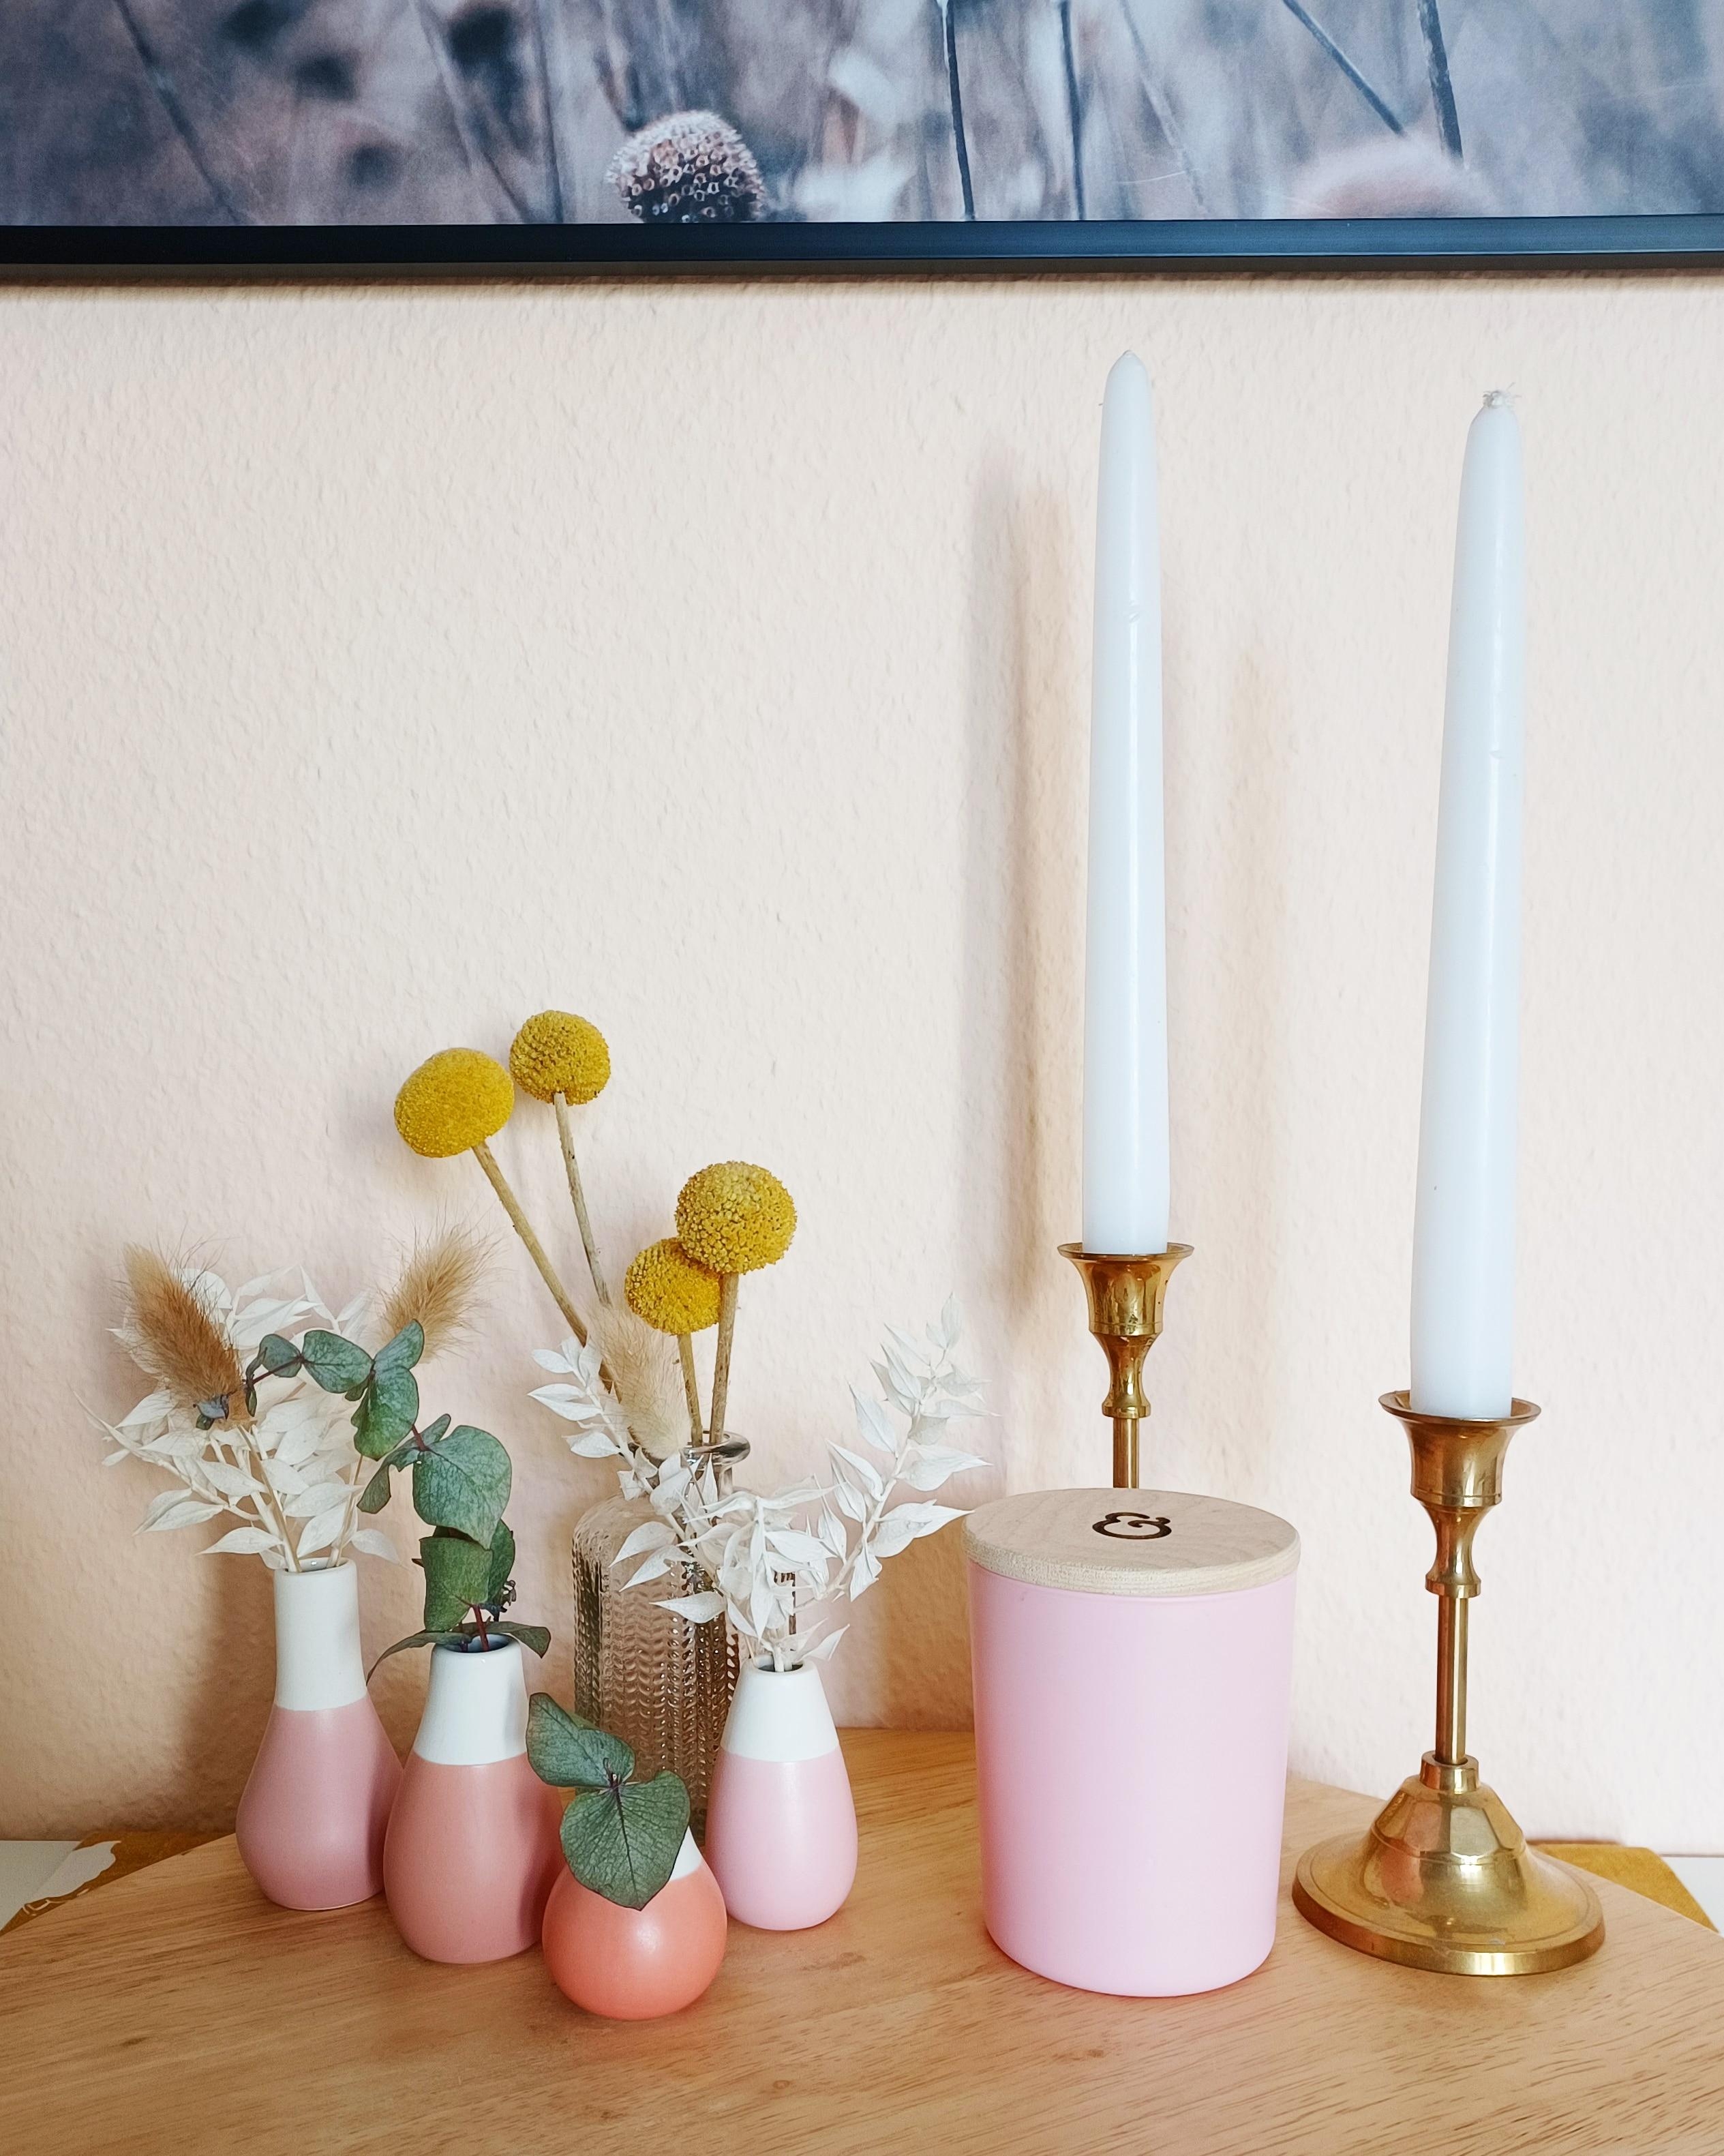 Detailliebe
#decoration #interior #candles